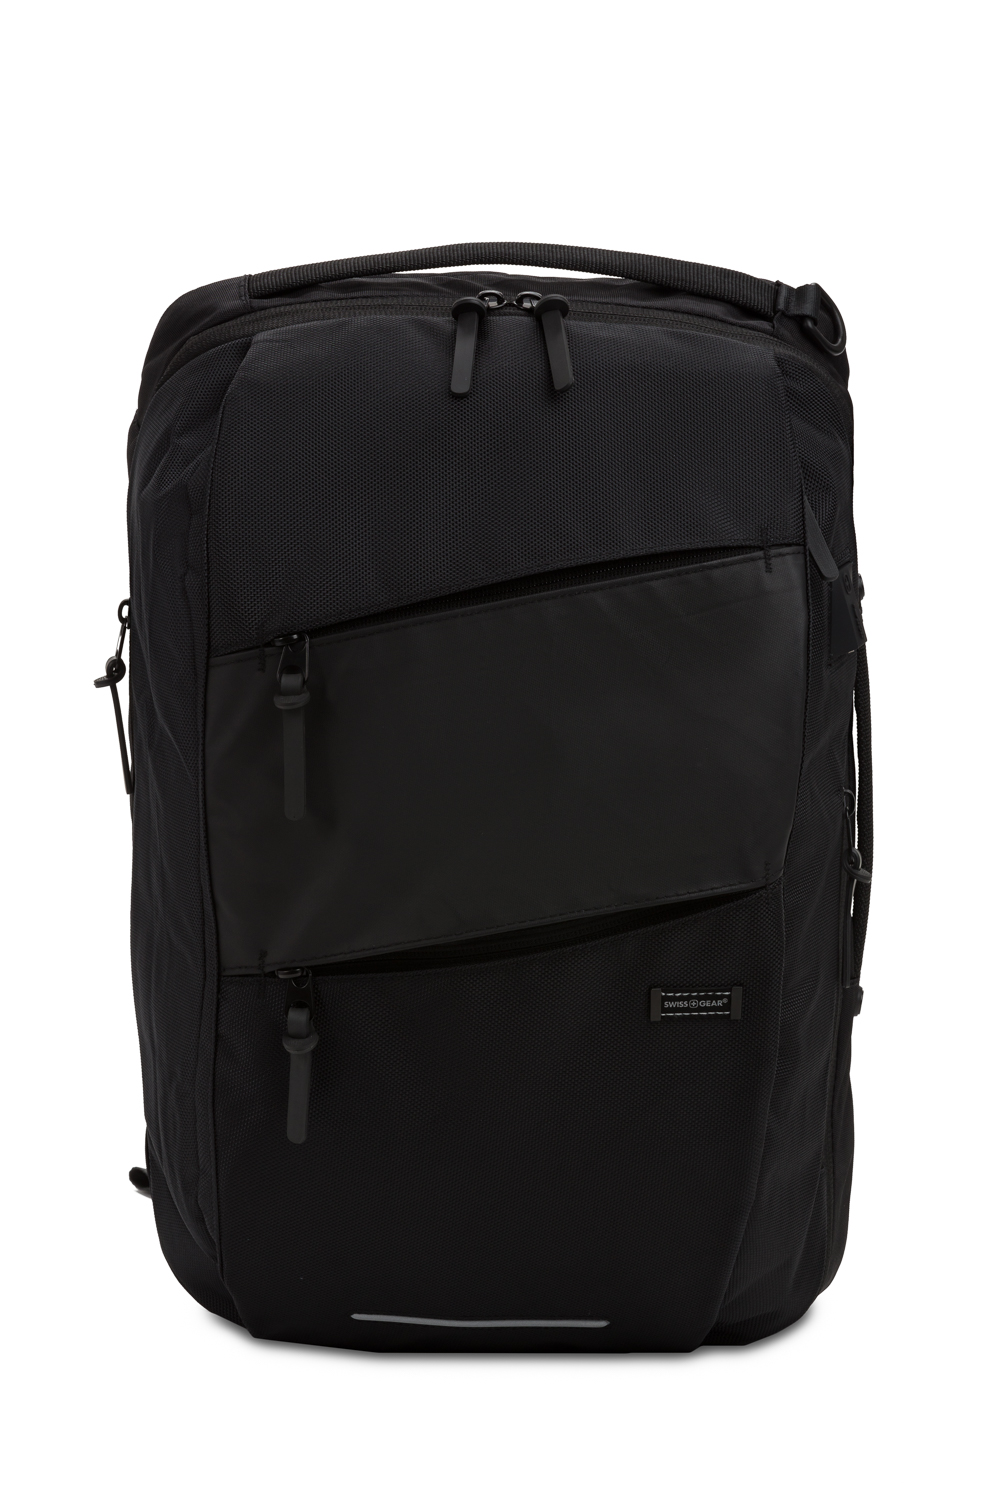 Swissgear 2872 USB Travel Laptop Backpack - Black